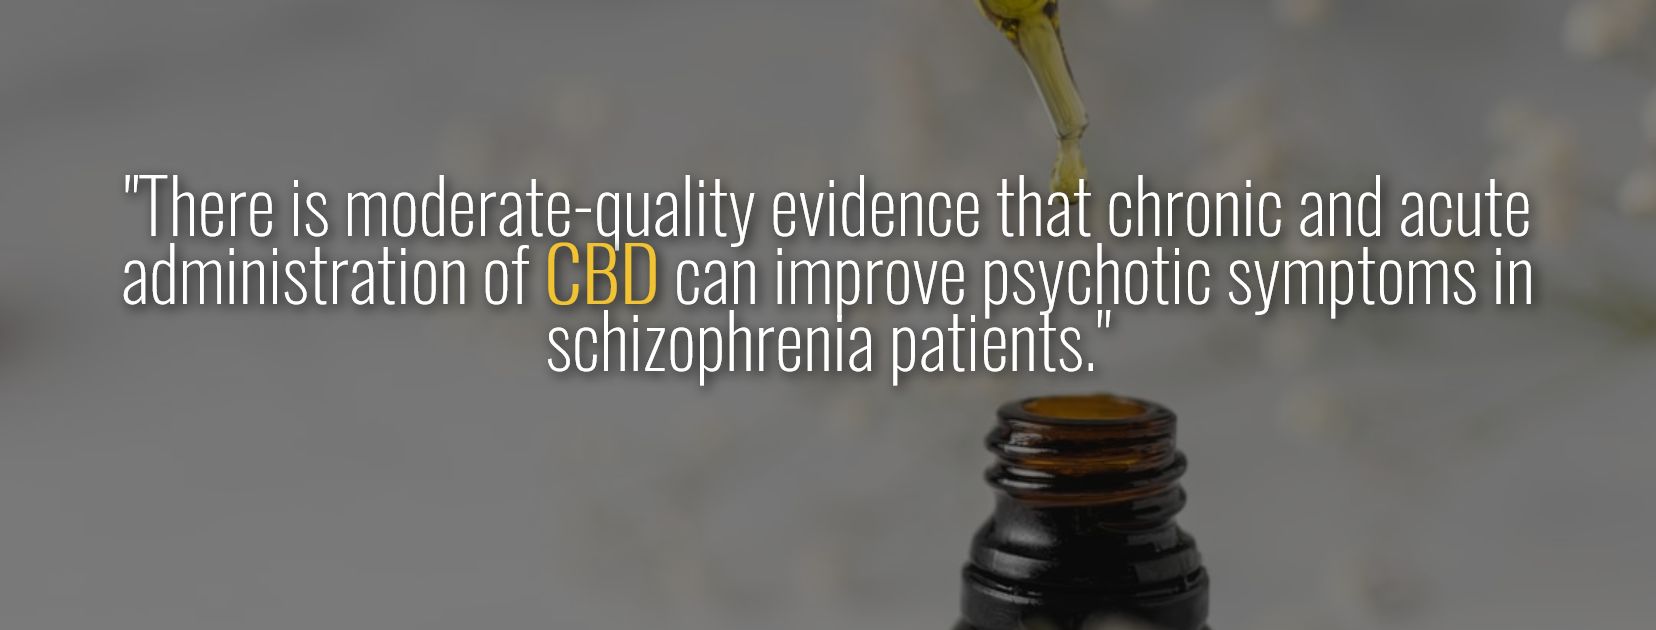 CBD May Improve Psychotic Symptoms In Schizophrenia Patients